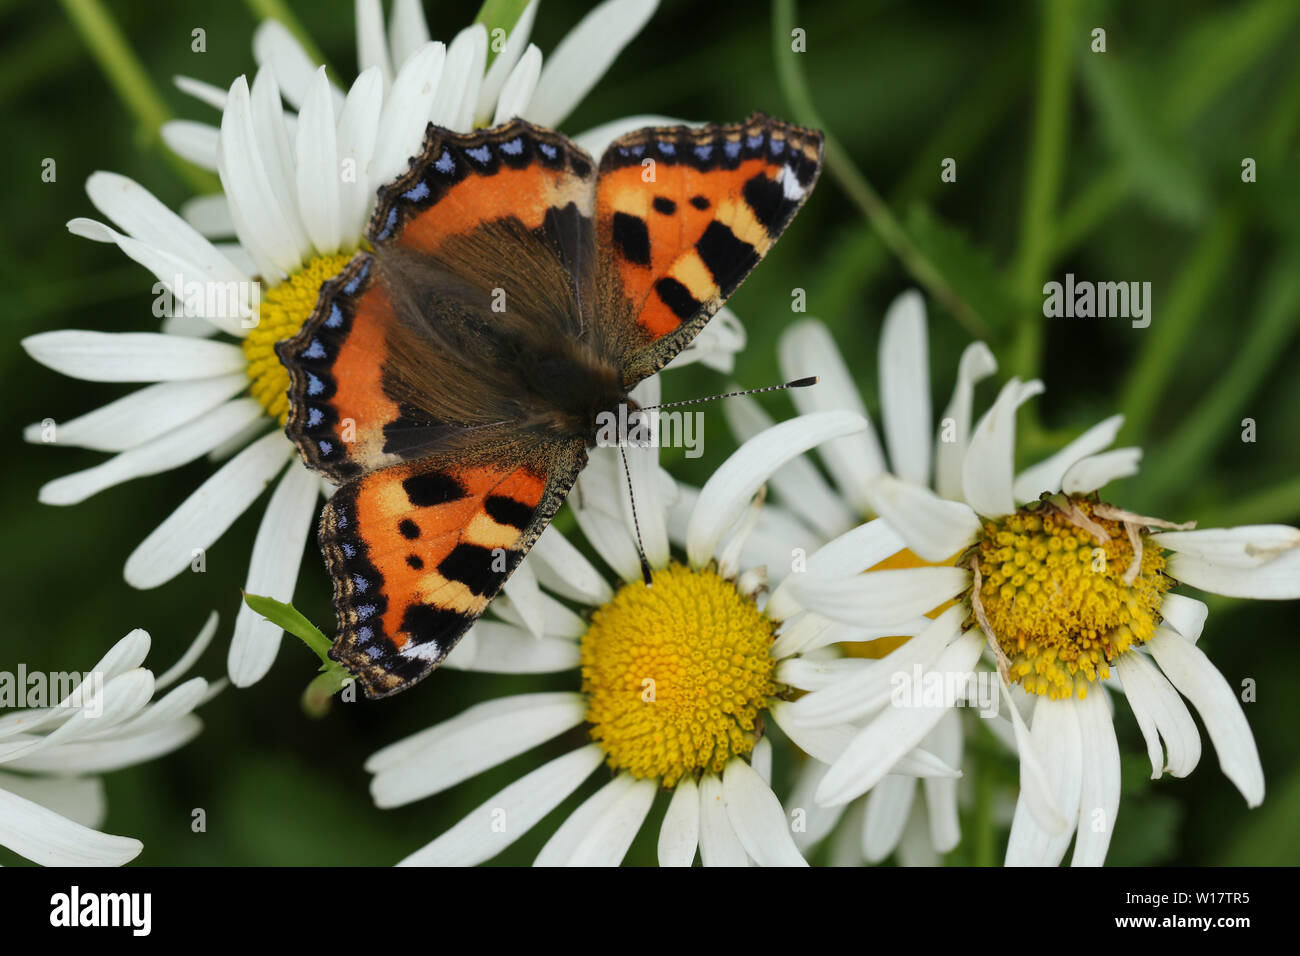 A pretty Small Tortoiseshell Butterfly, Aglais urticae, nectaring on a Dog Daisy flower. Stock Photo